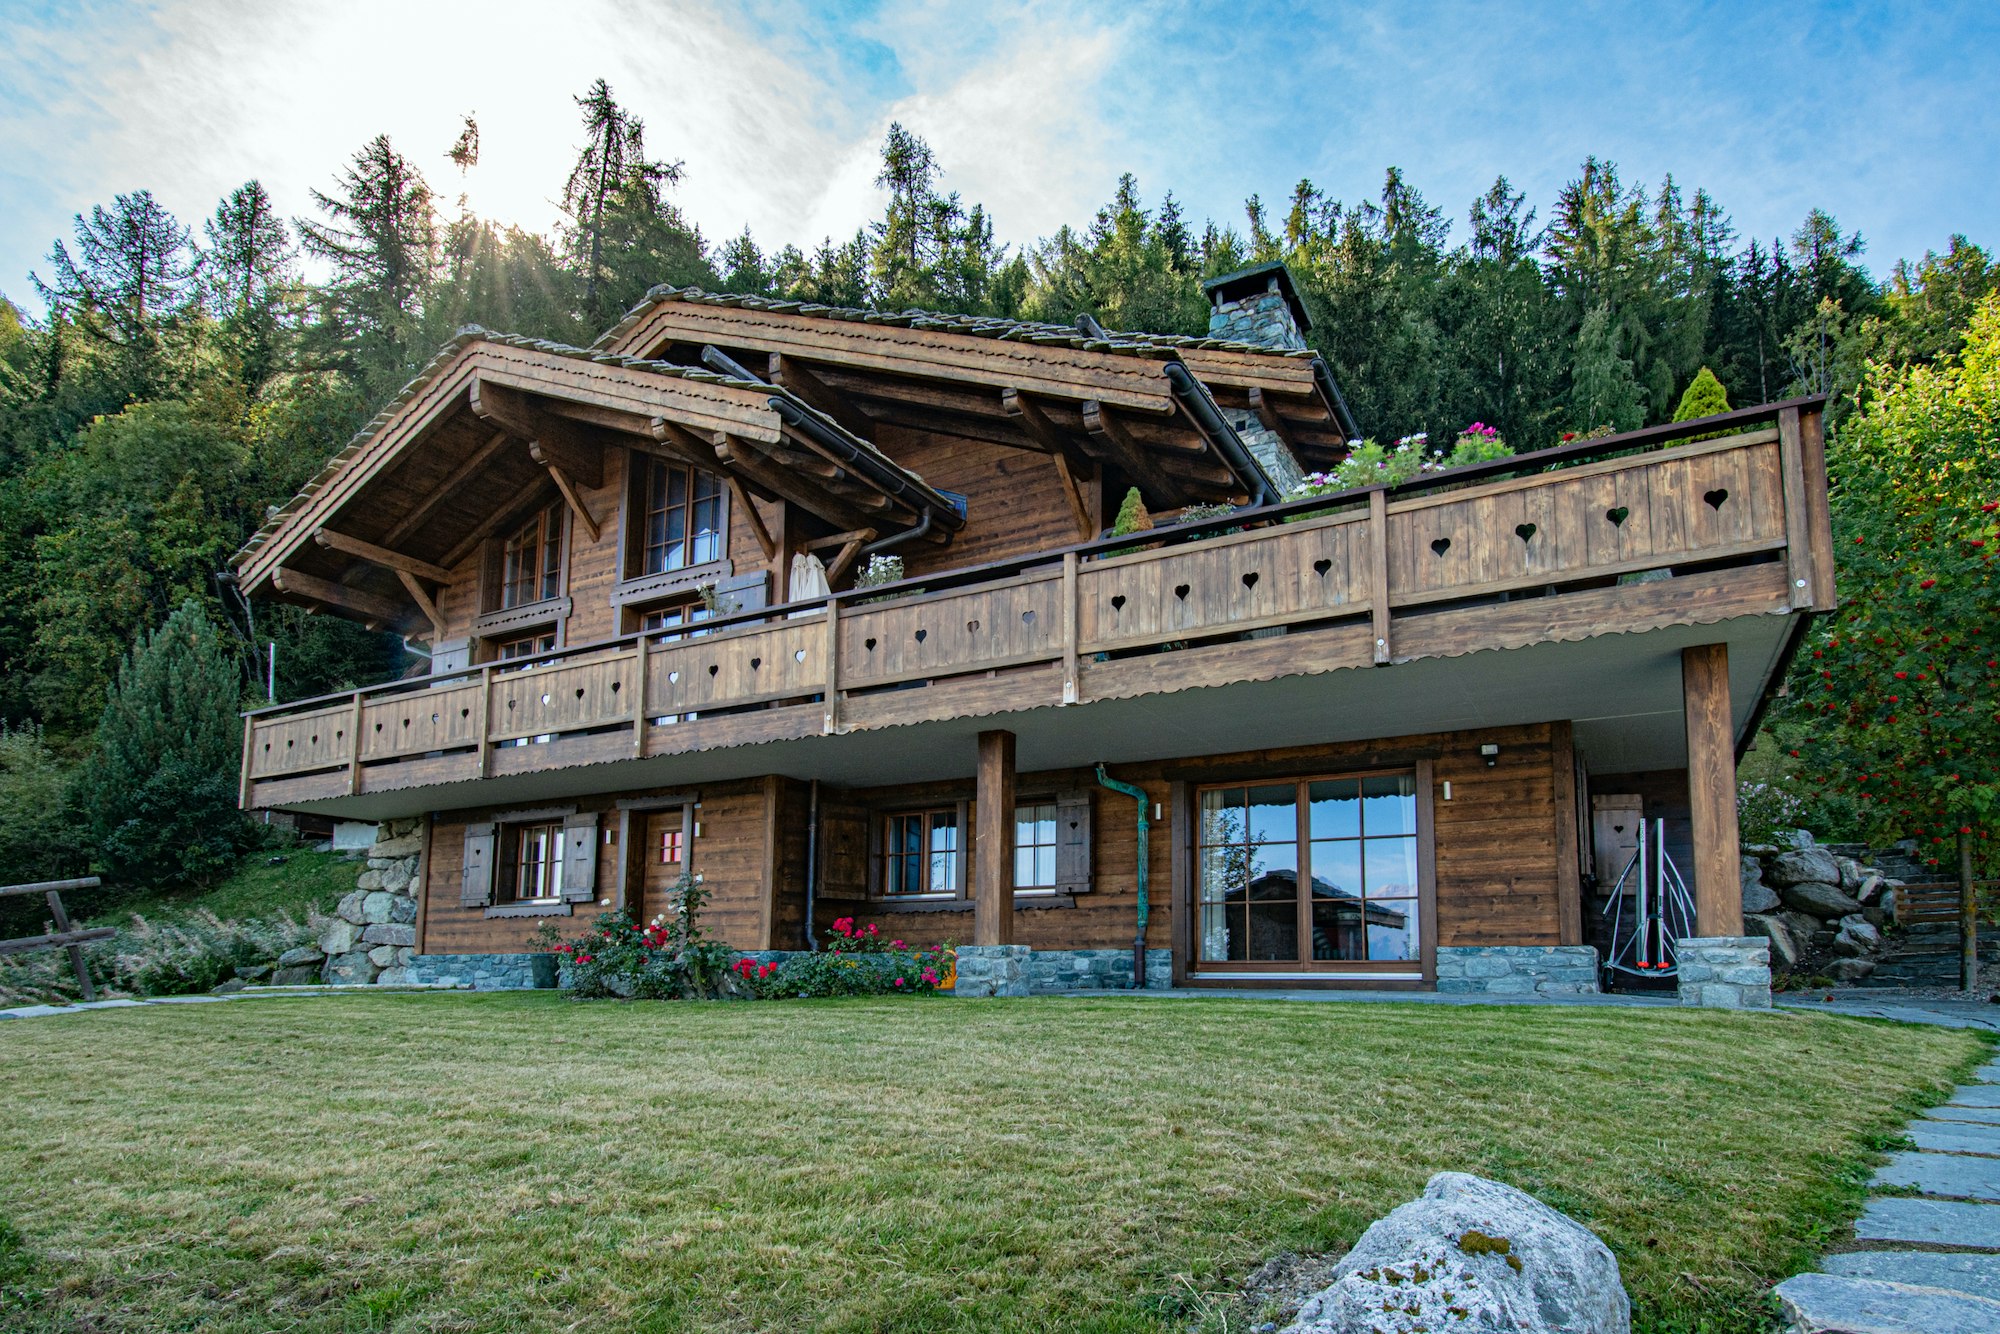 Alpine Homes in the press